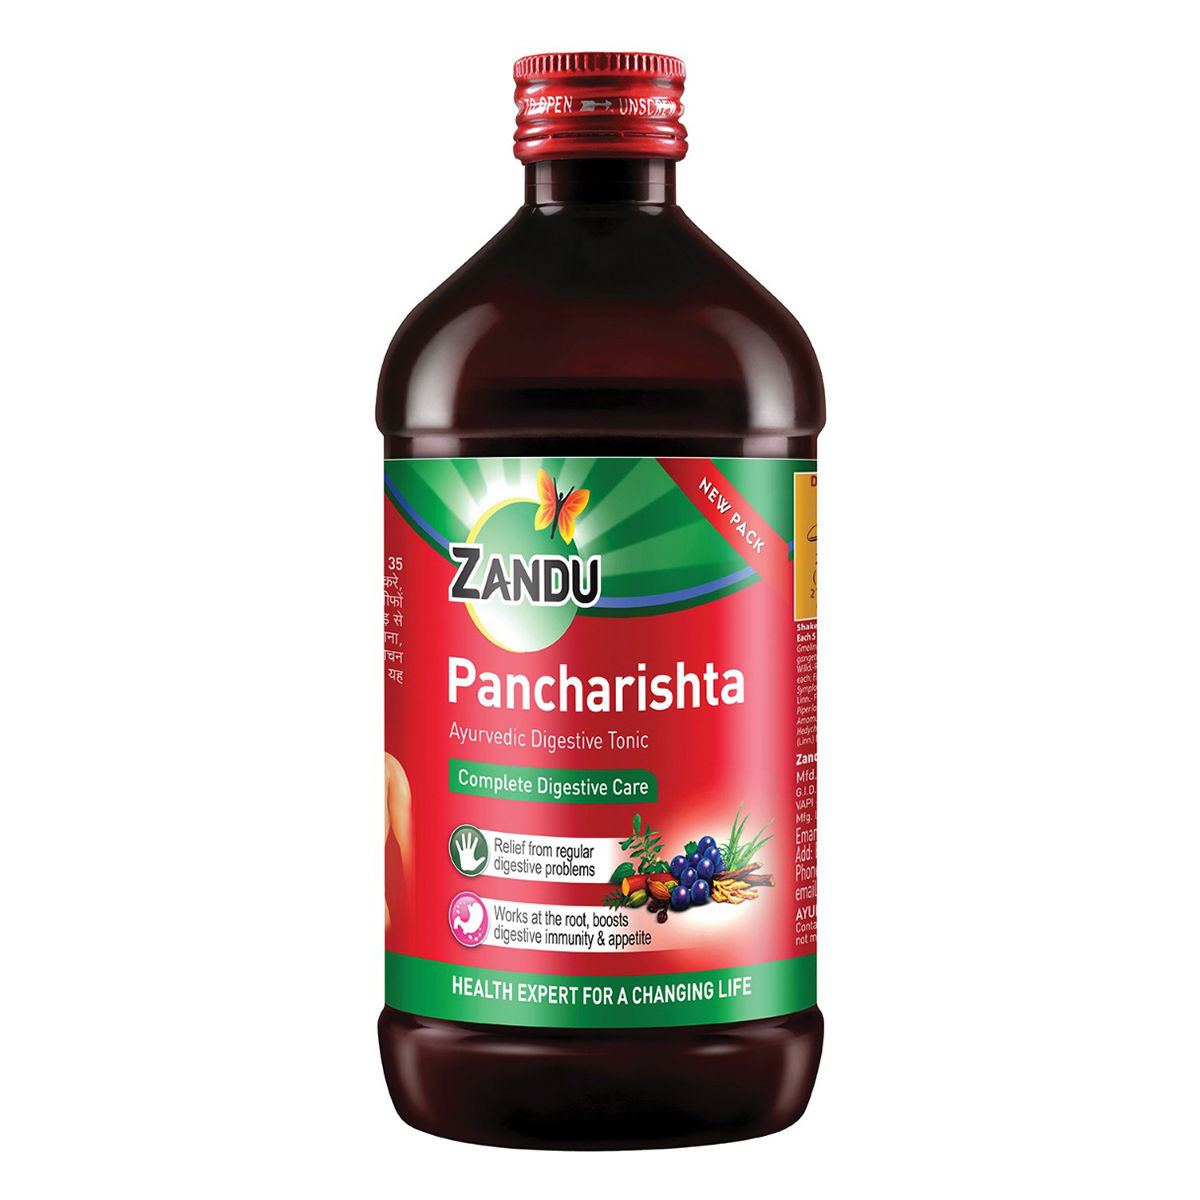 Zandu Pancharishta Ayurvedic Digestive Tonic, 650 ml, Pack of 1 